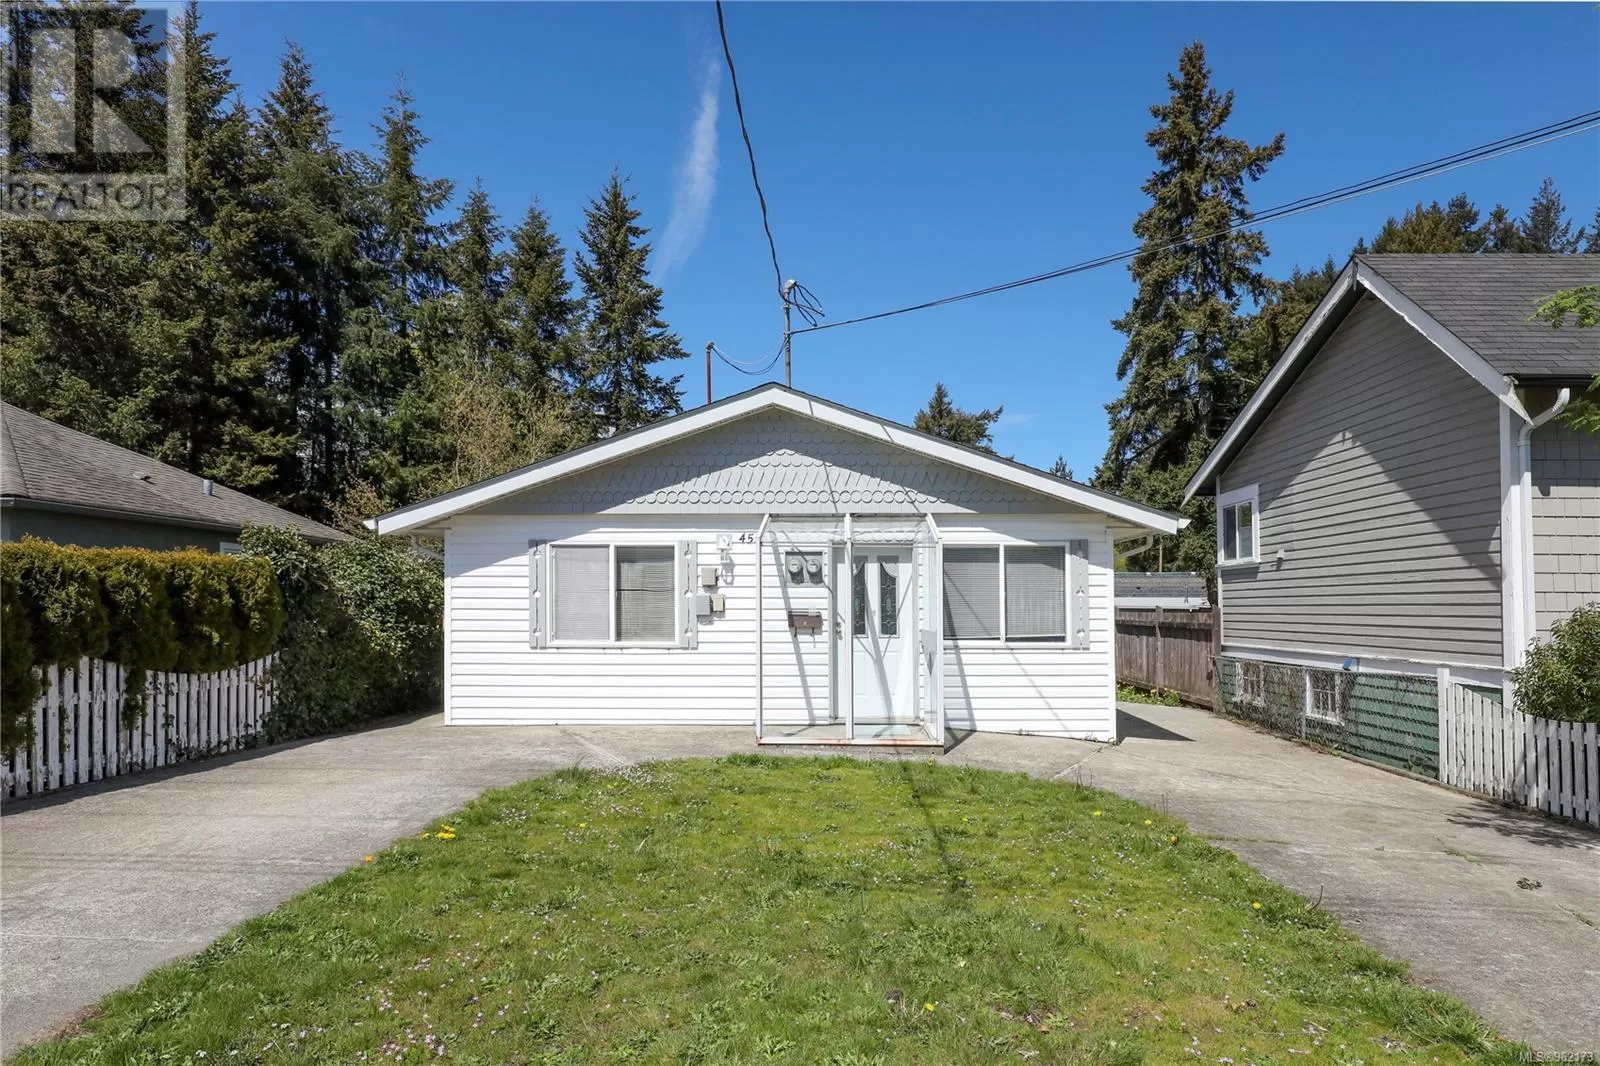 Duplex for rent: 455 3rd St, Courtenay, British Columbia V9N 1E6